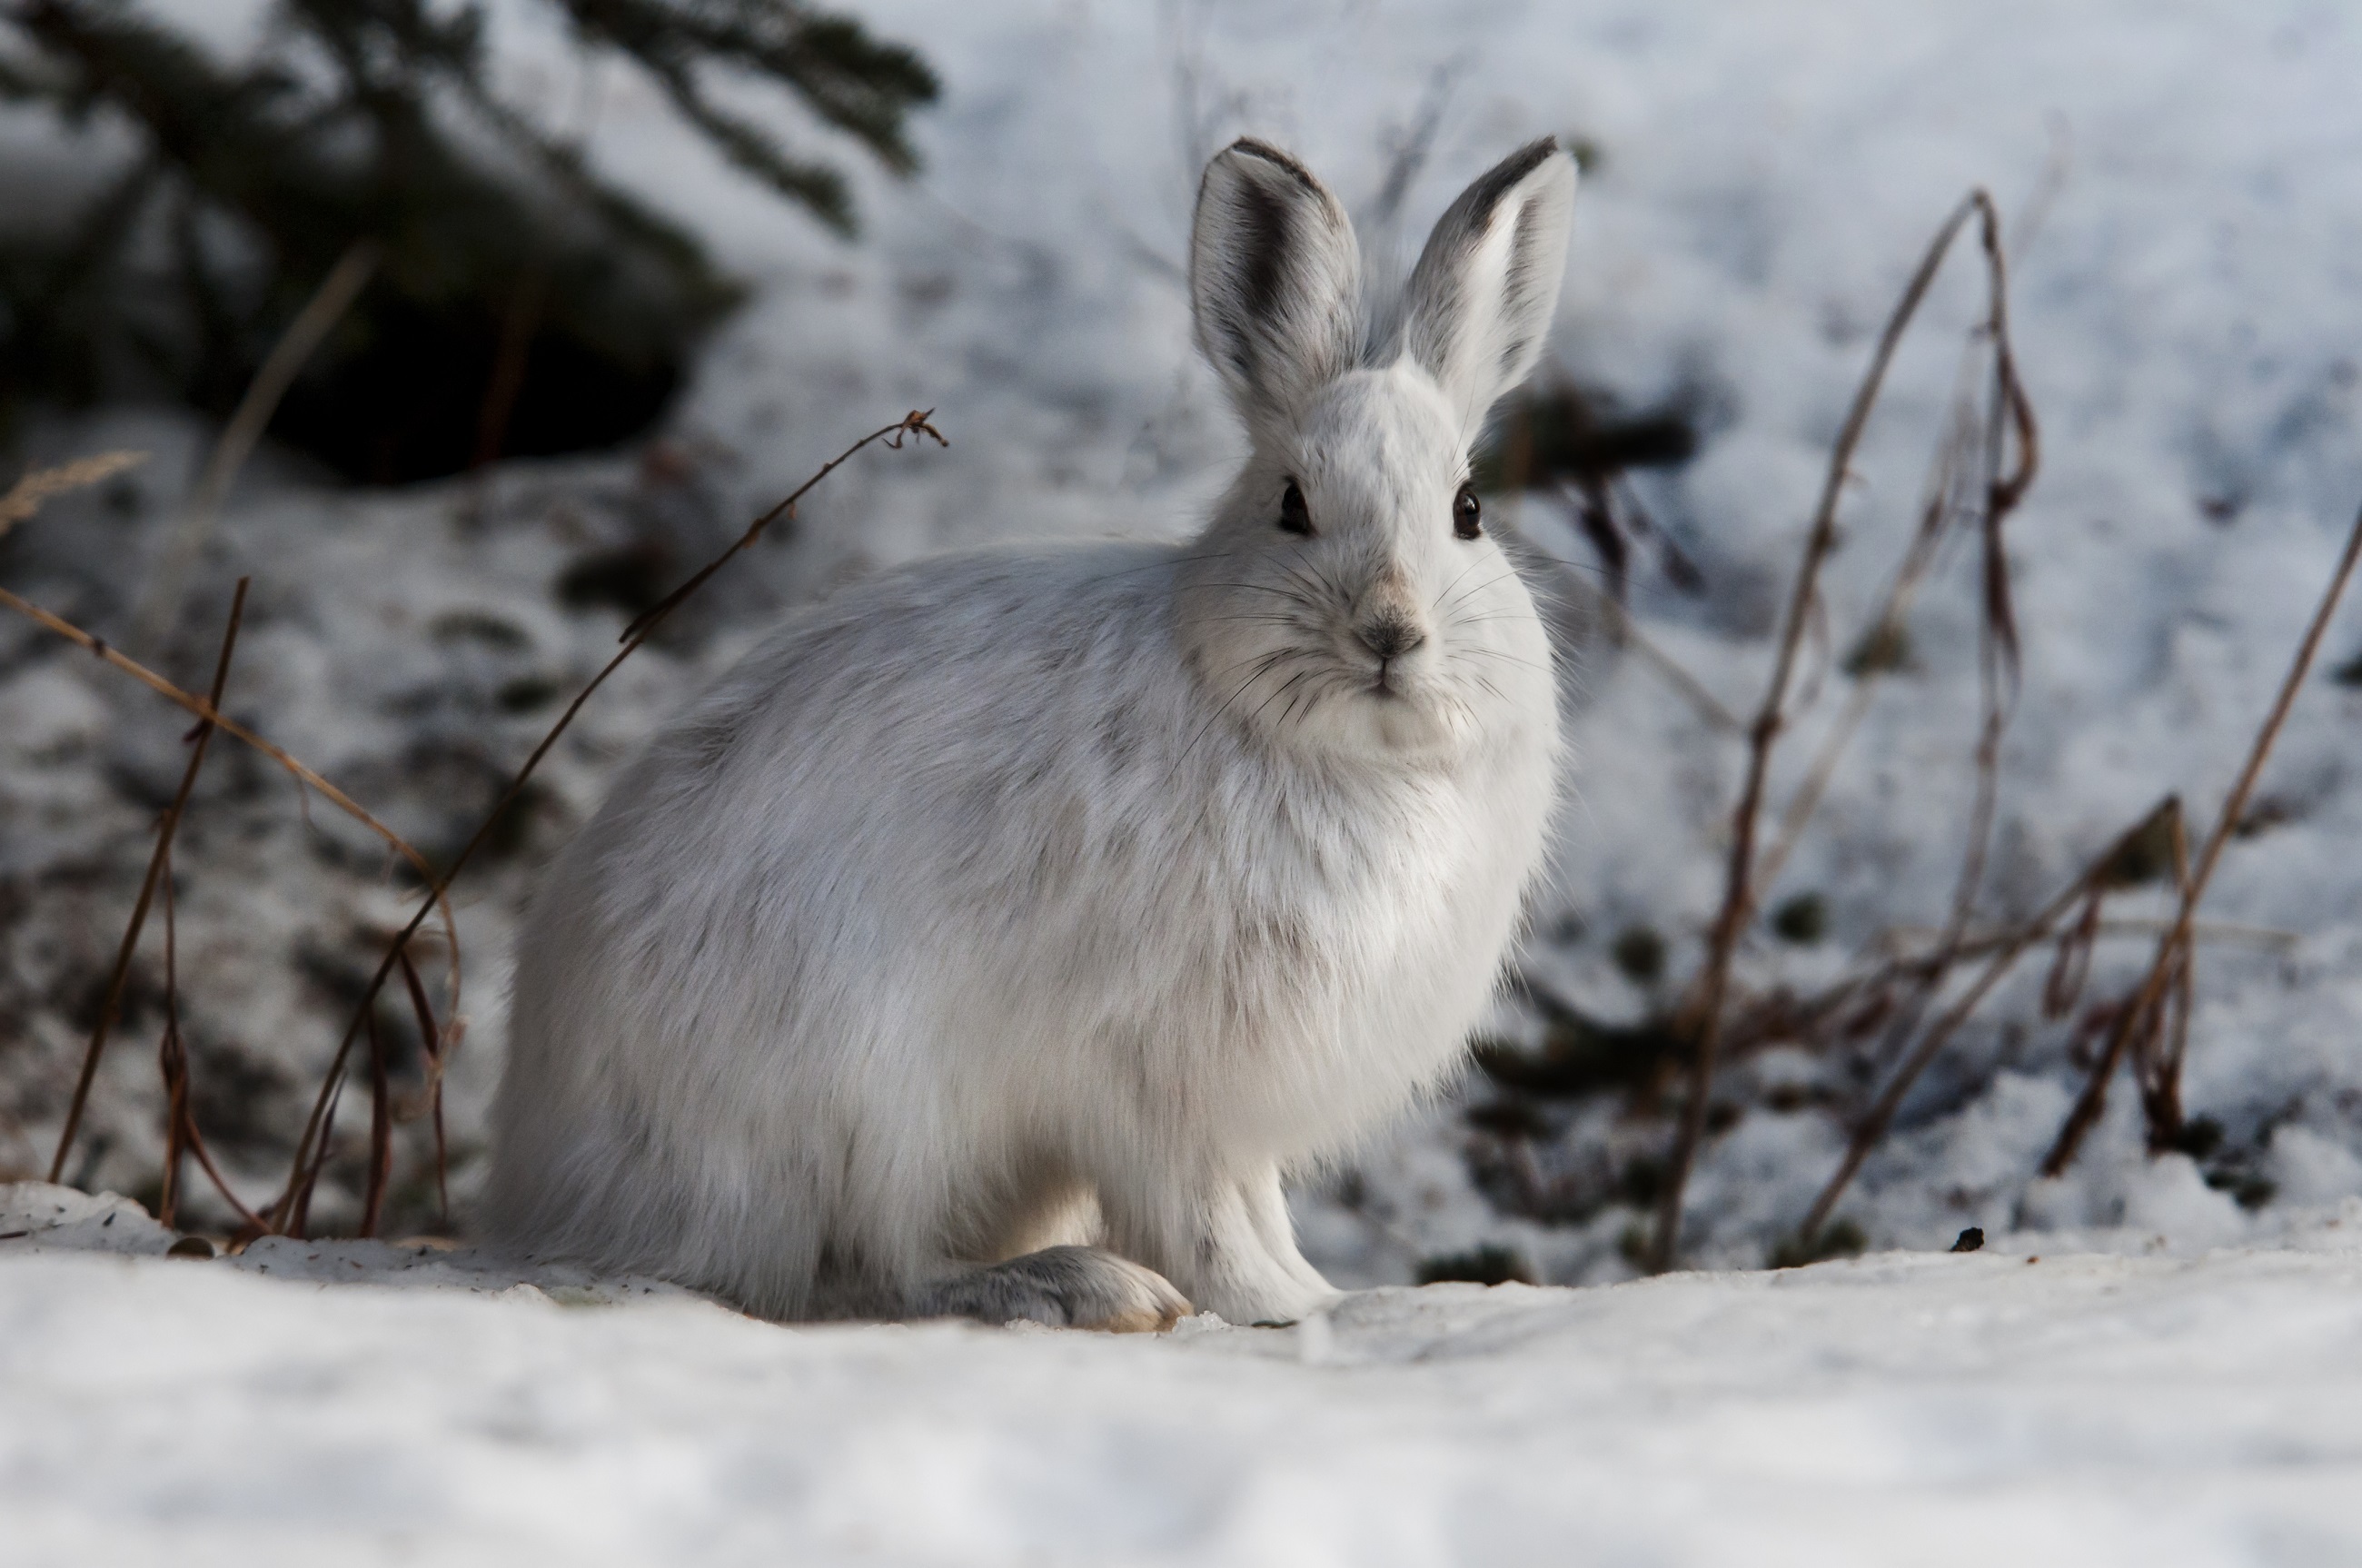 White fluffy hare in winter